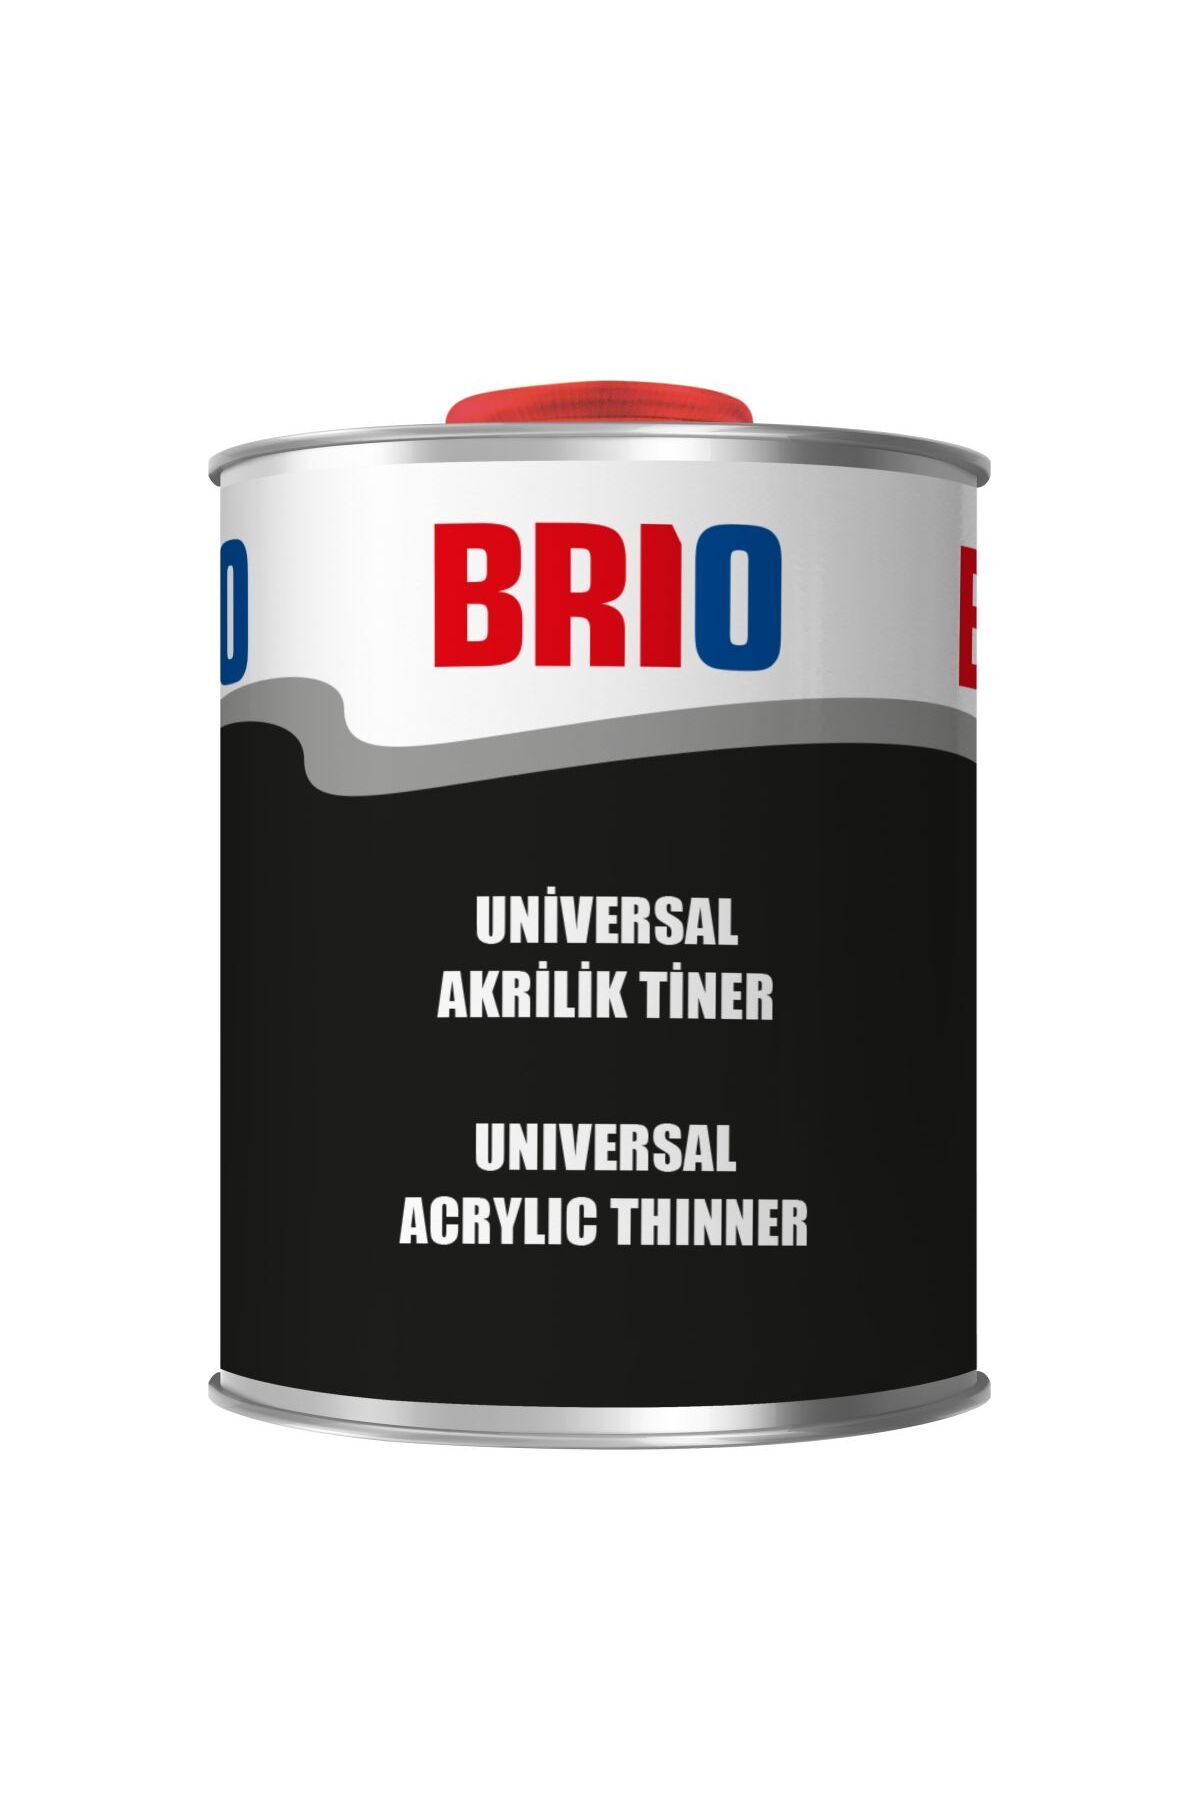 Brio Tiner Universal Akrilik Tiner Standart 1 L